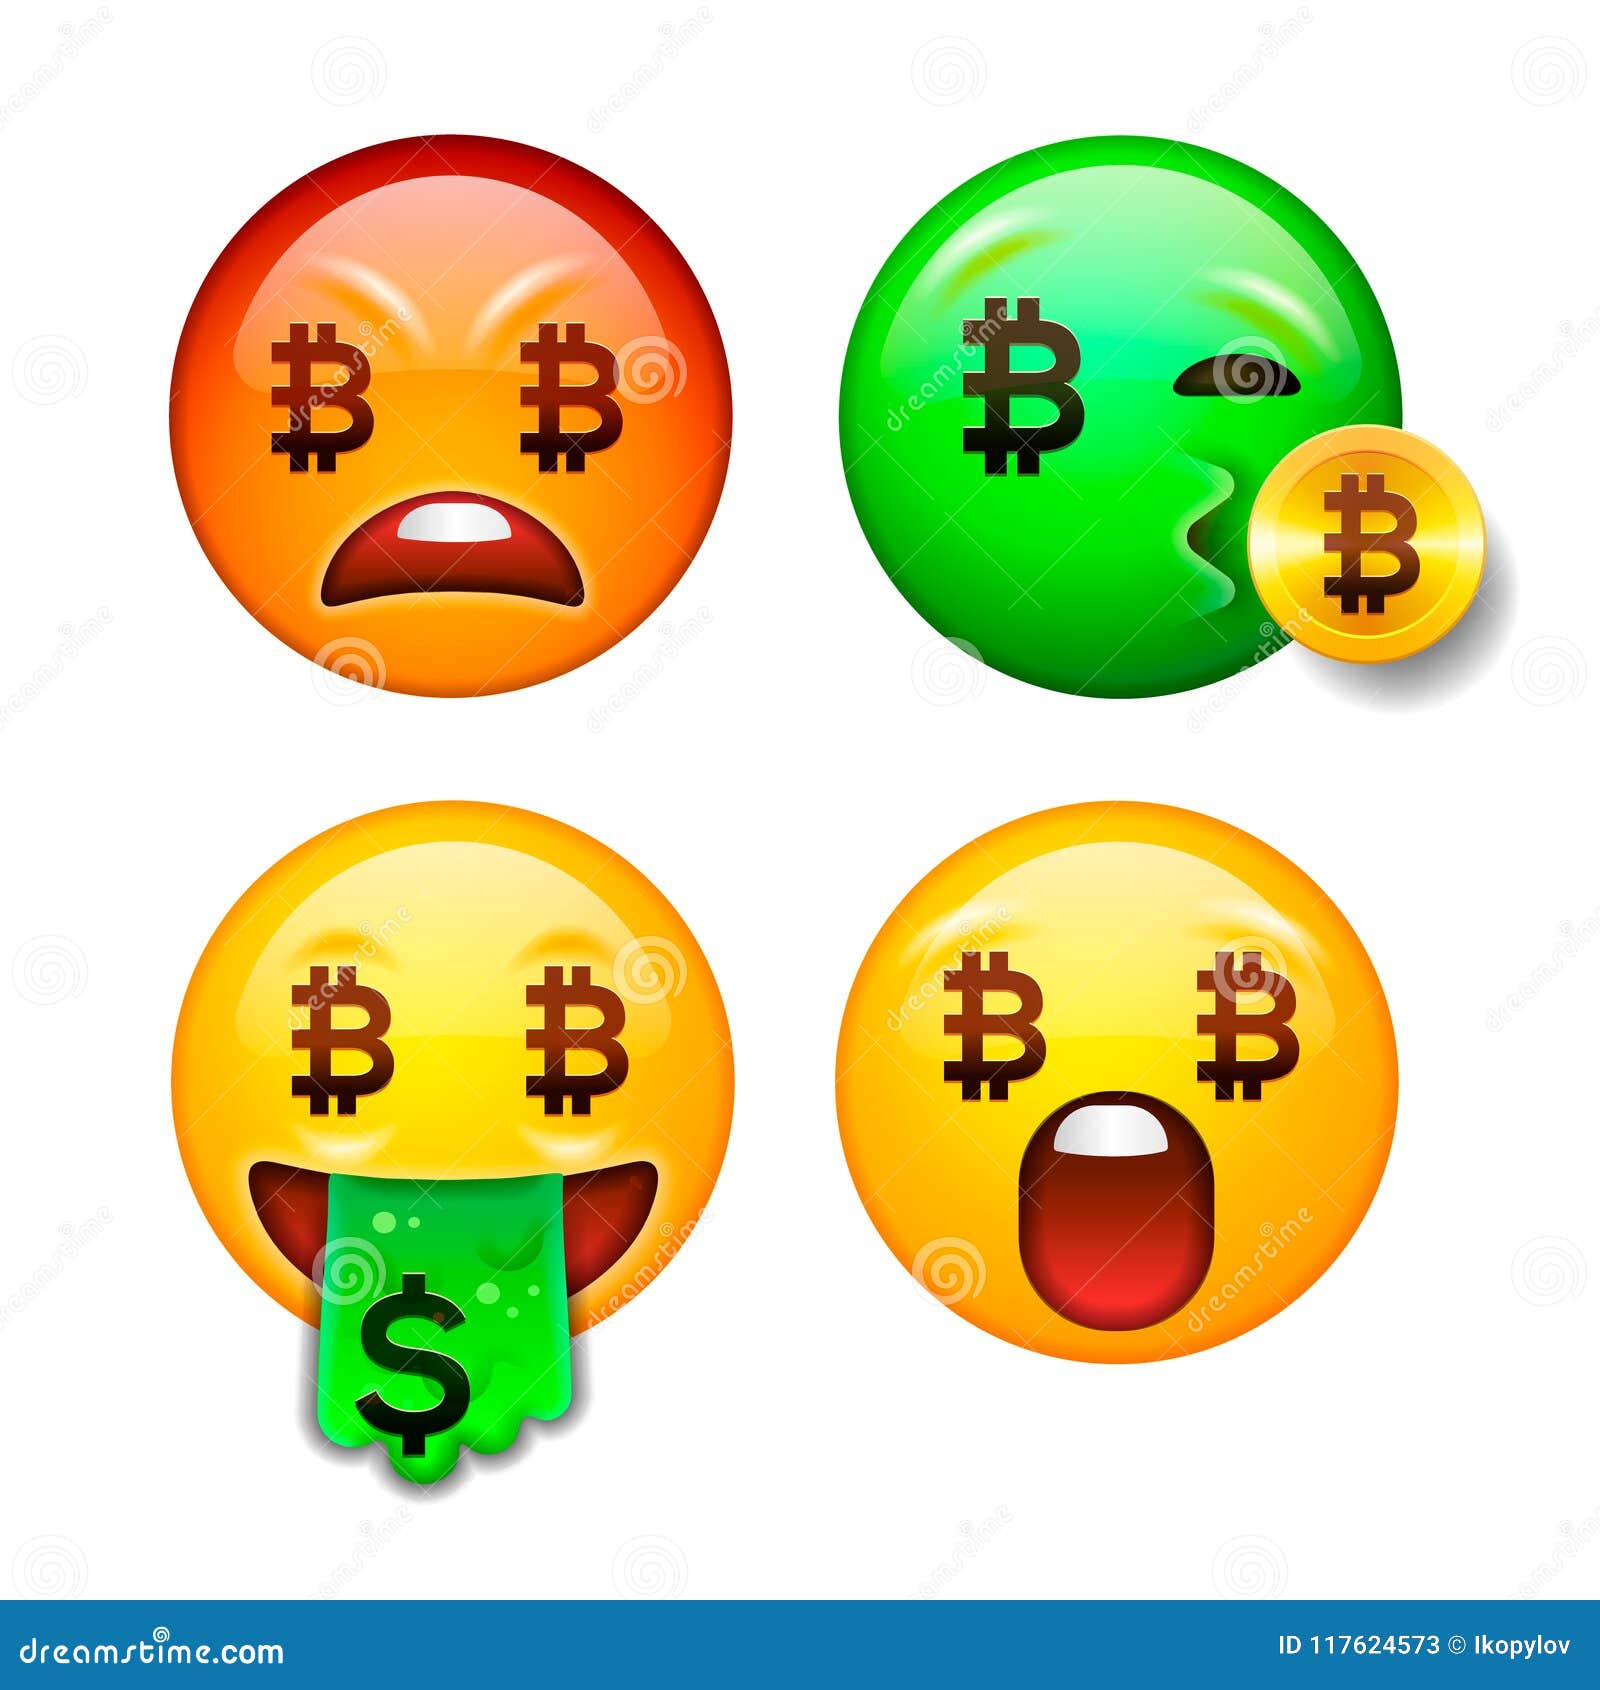 Bitcoin emoji wallet